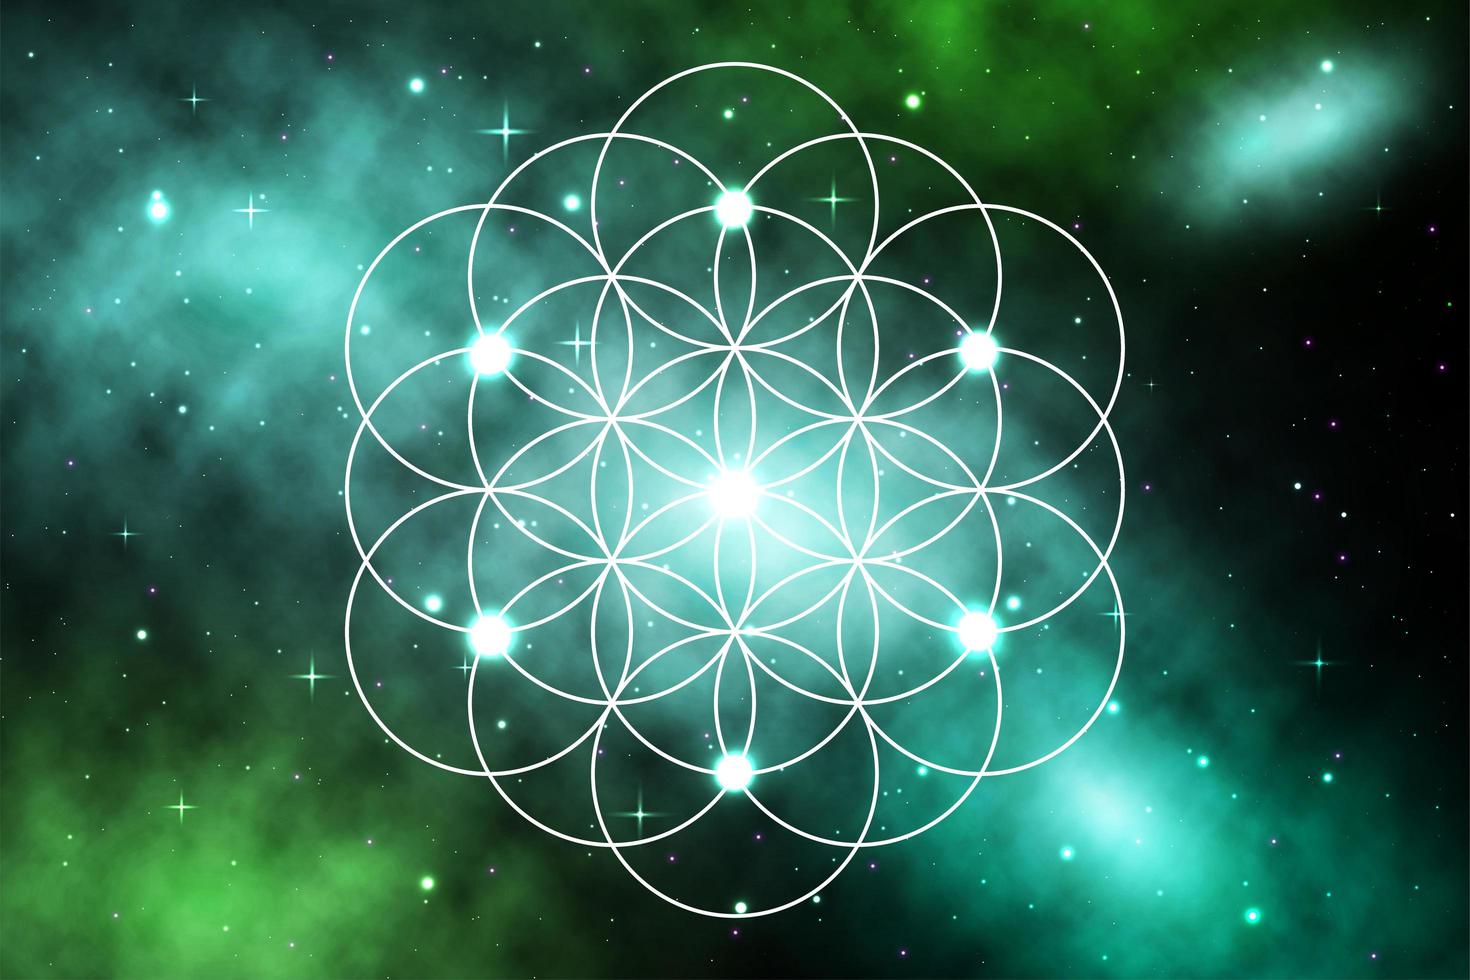  Blume Des Lebens Hintergrundbild 1470x980. Mandala heilige Geometrie Blume des Lebens in der Galaxie 1101320 Vektor Kunst bei Vecteezy